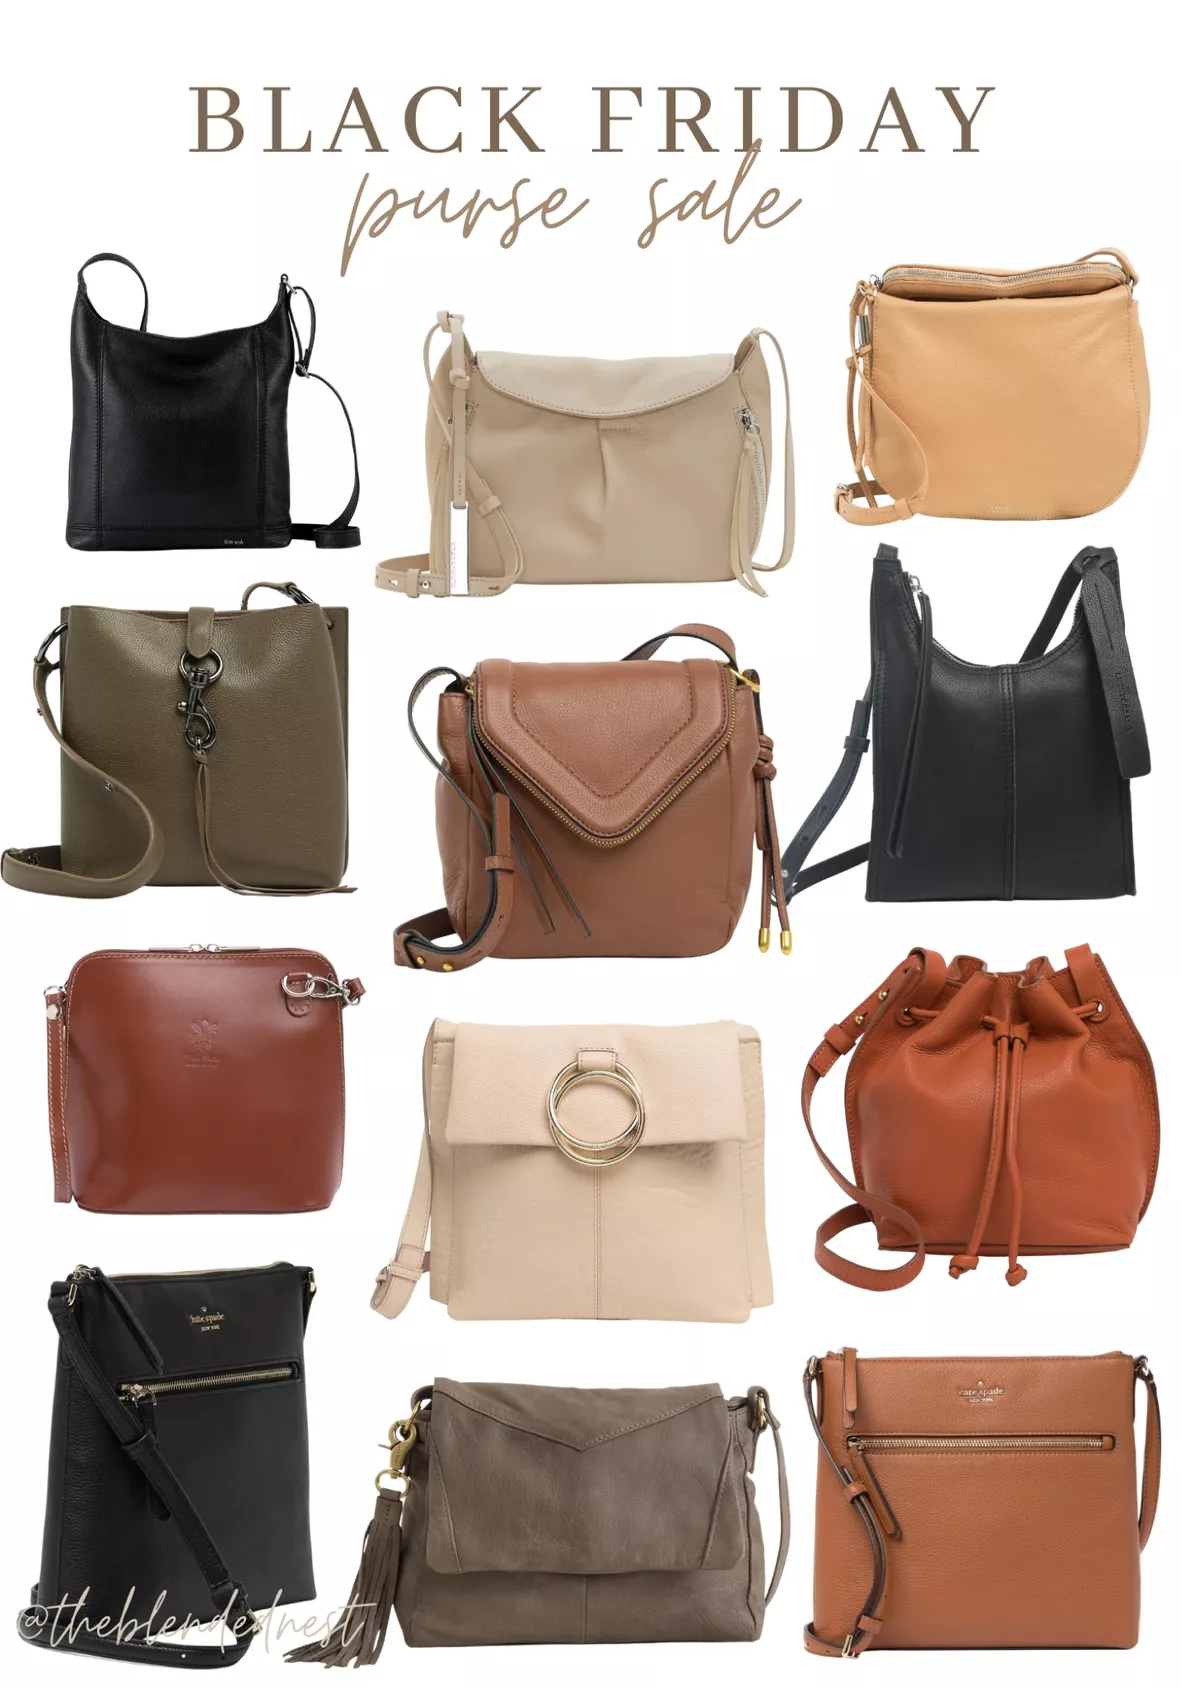 Black Friday Handbag Sale: Get great deals on Kate Spade, Coach